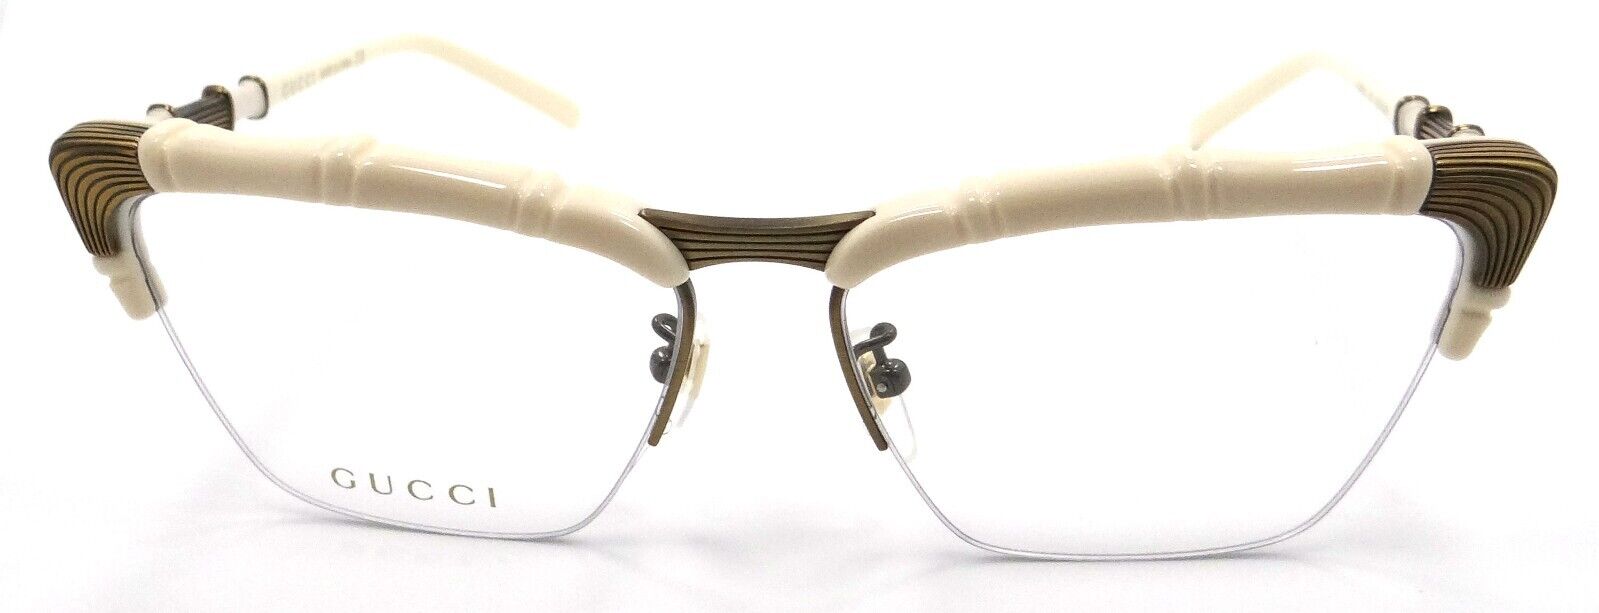 Gucci Eyeglasses Frames GG0660O 002 58-15-140 White Made in Japan-889652276625-classypw.com-2